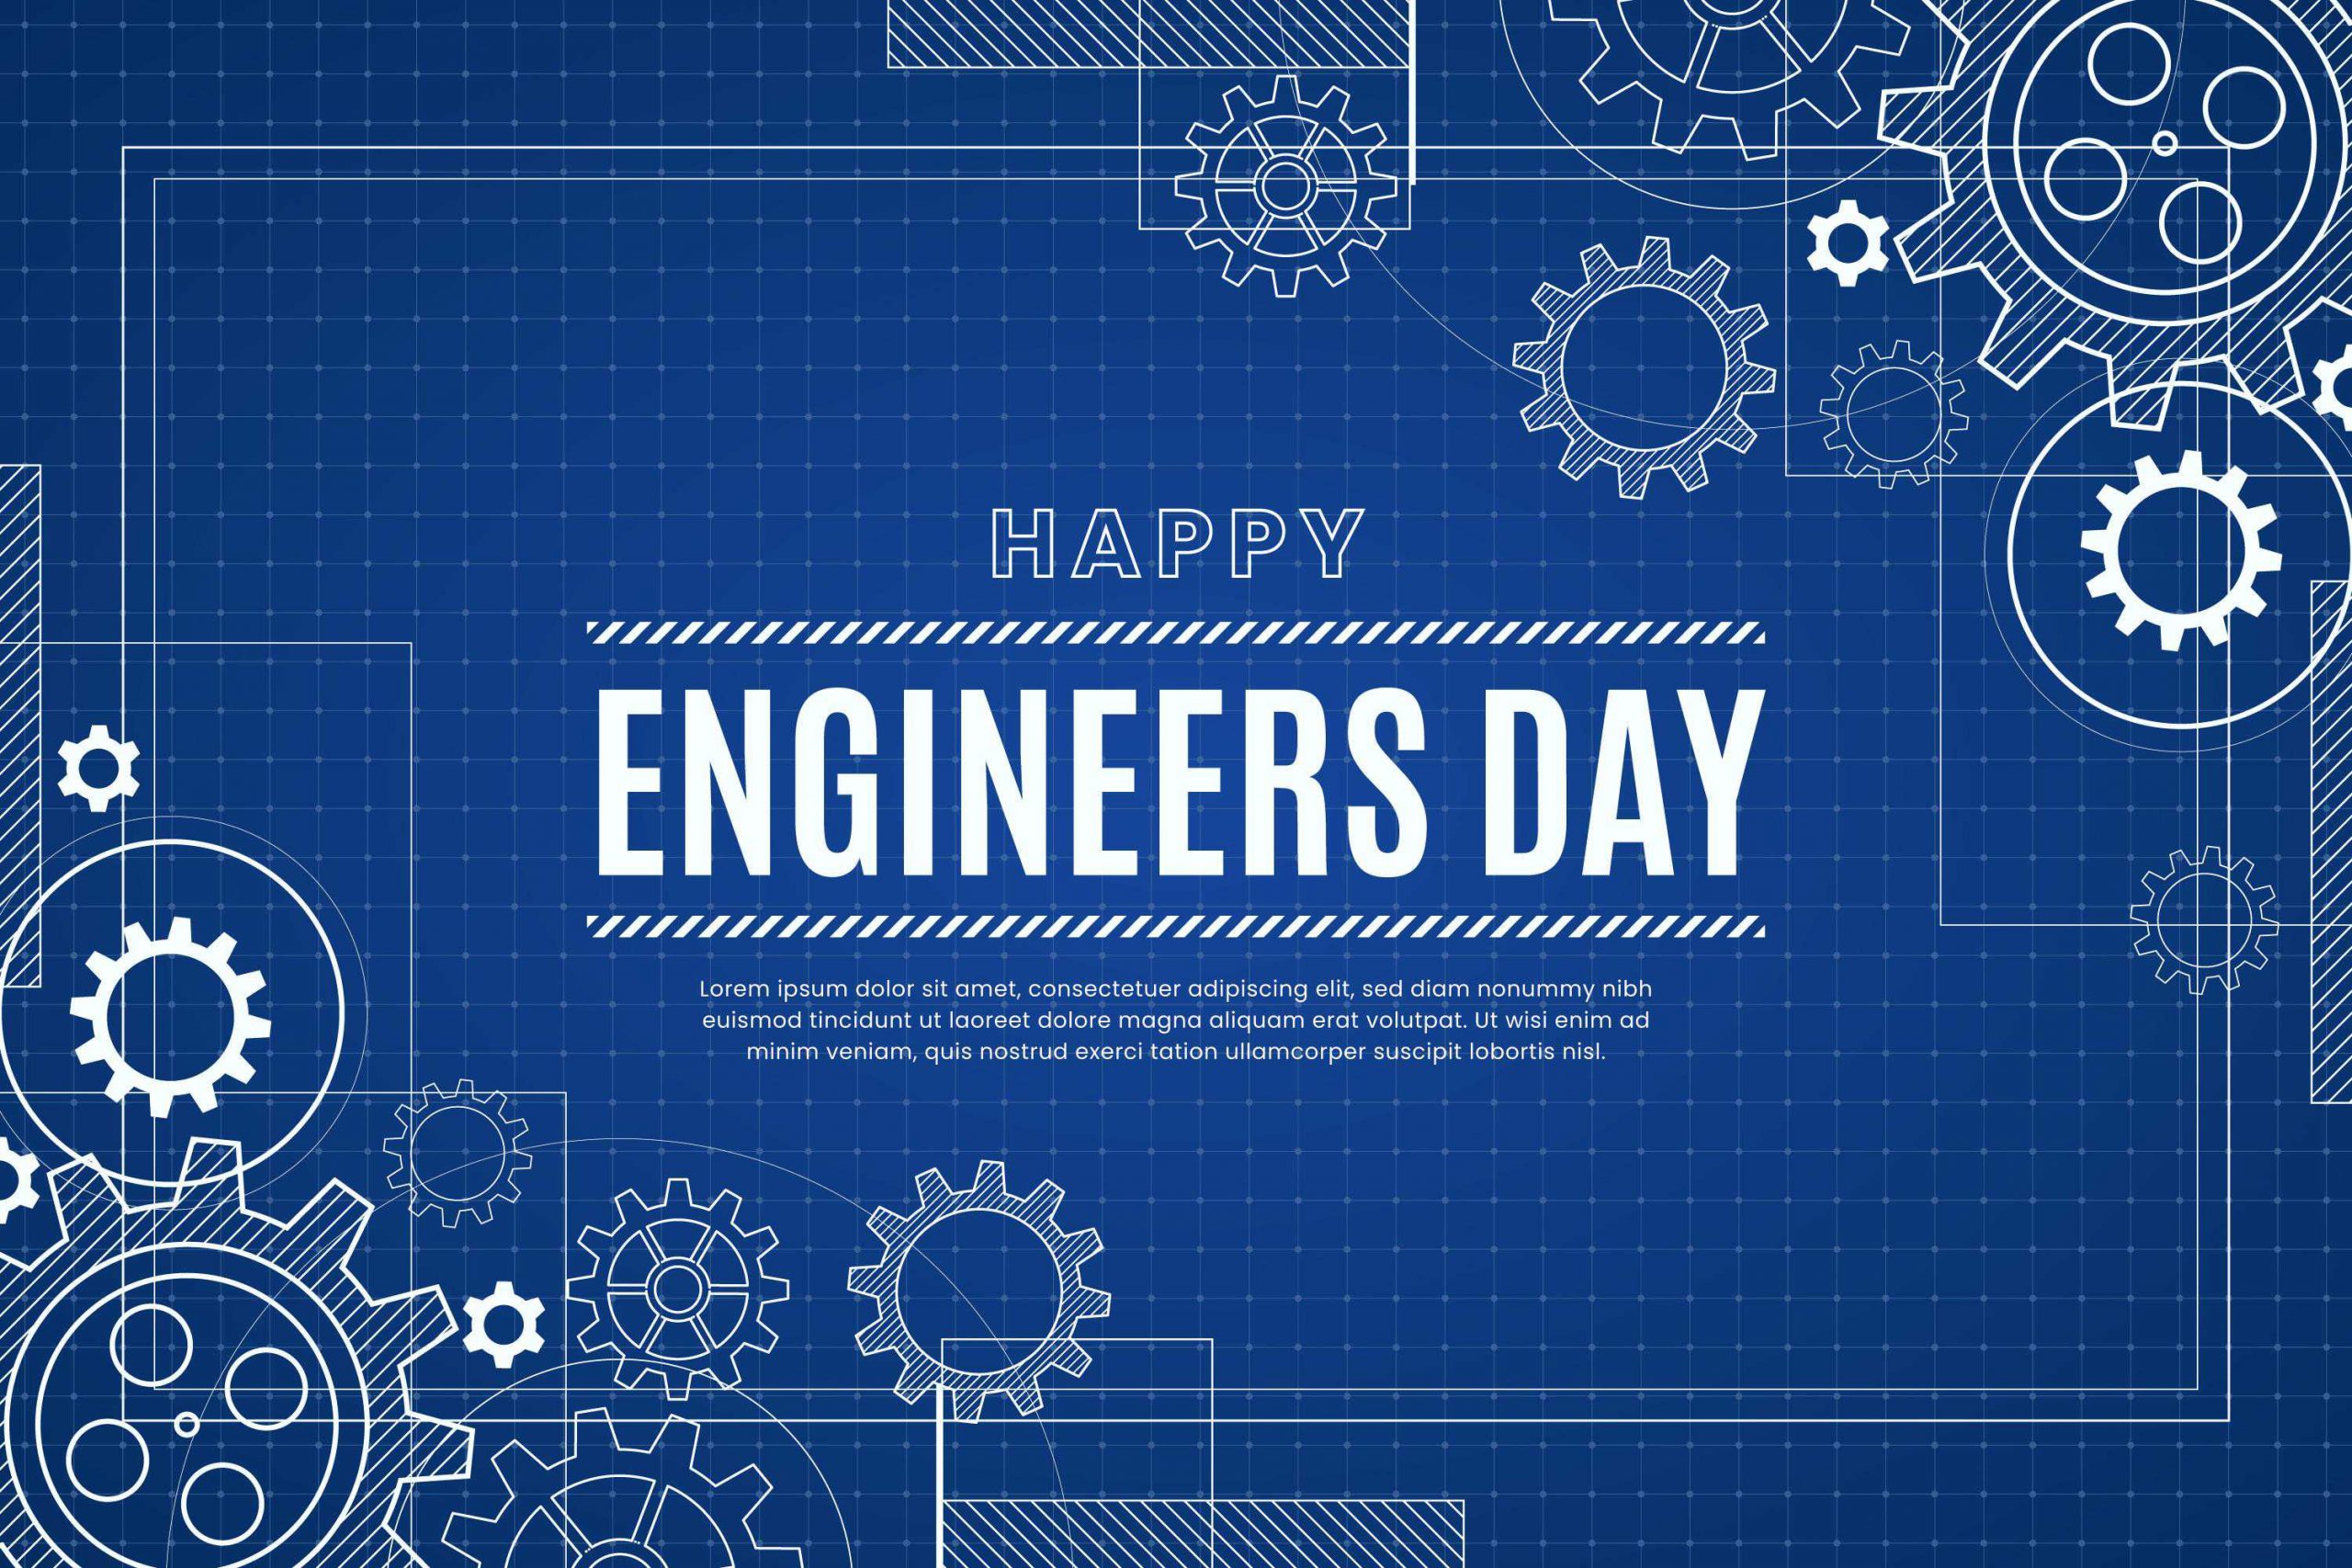 Happy Engineer's Day HD Image & Photo Free Download 2023 - Image Diamond